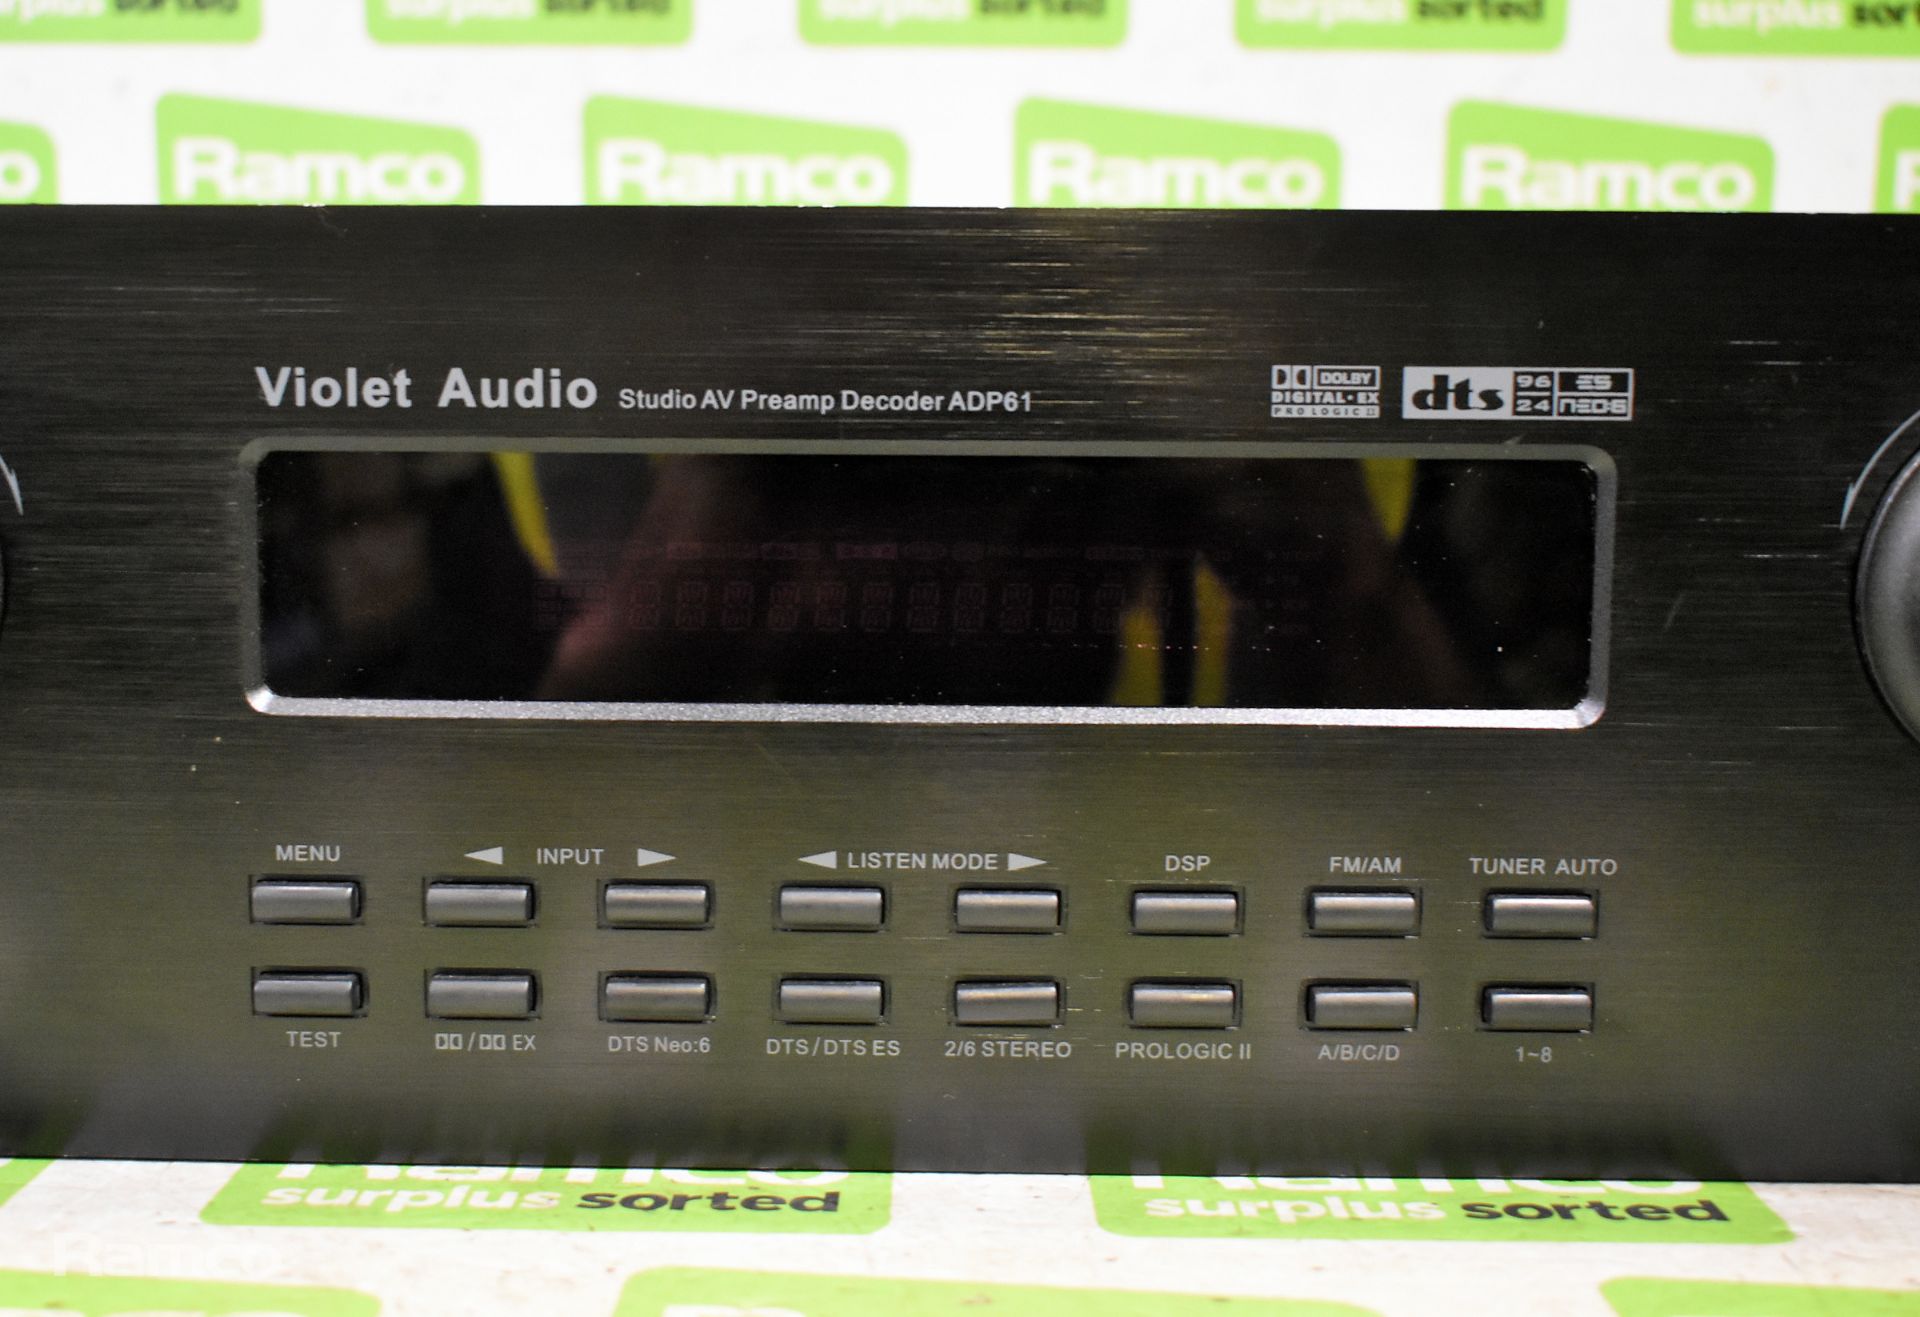 Violet Audio ADP61 studio AV preamp decoder - Dolby DTS, 24-bit, 192 KHz - Bild 2 aus 4